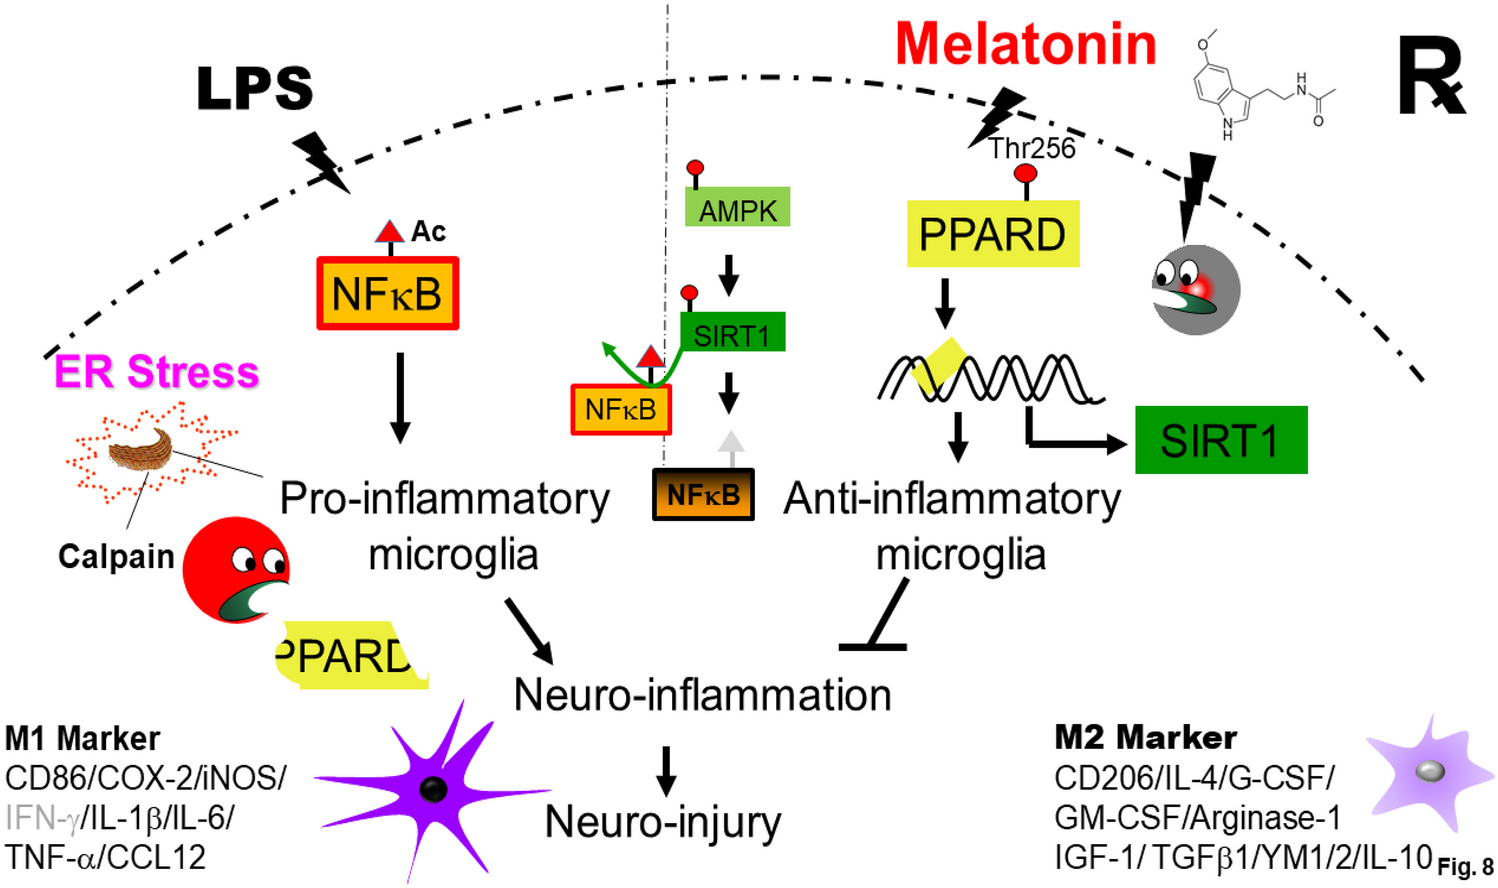 Melatonin Enhanced Microglia M2 Polarization in Rat Model of Neuro-inflammation Via Regulating ER Stress/PPARδ/SIRT1 Signaling Axis